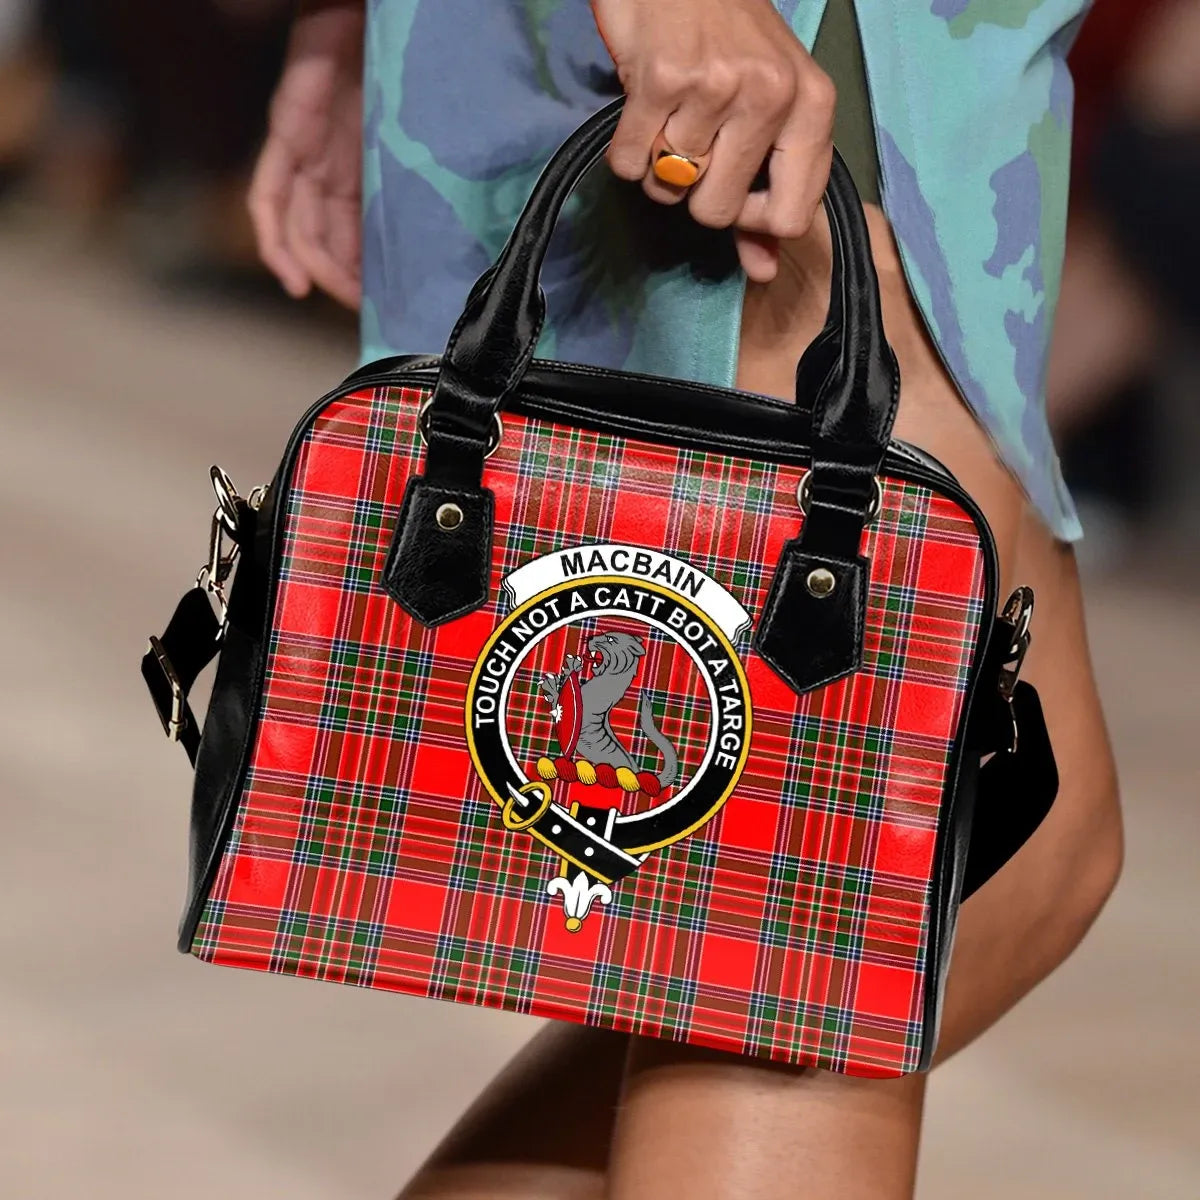 Macbain Tartan Crest Shoulder Handbag